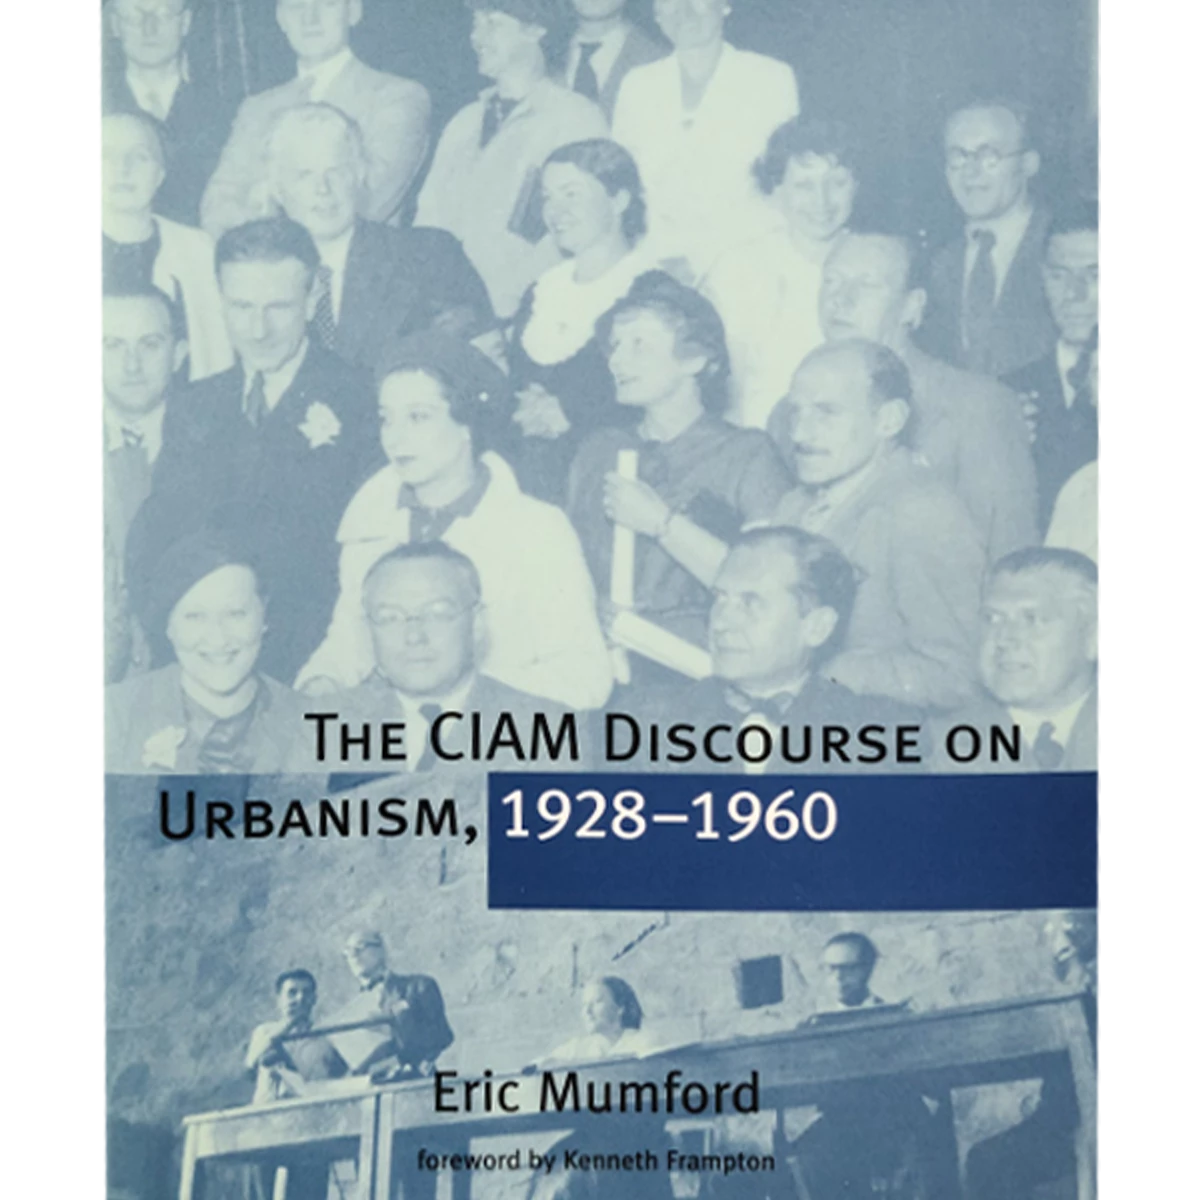 The CIAM Discourse on Urbanism, 1928-1960